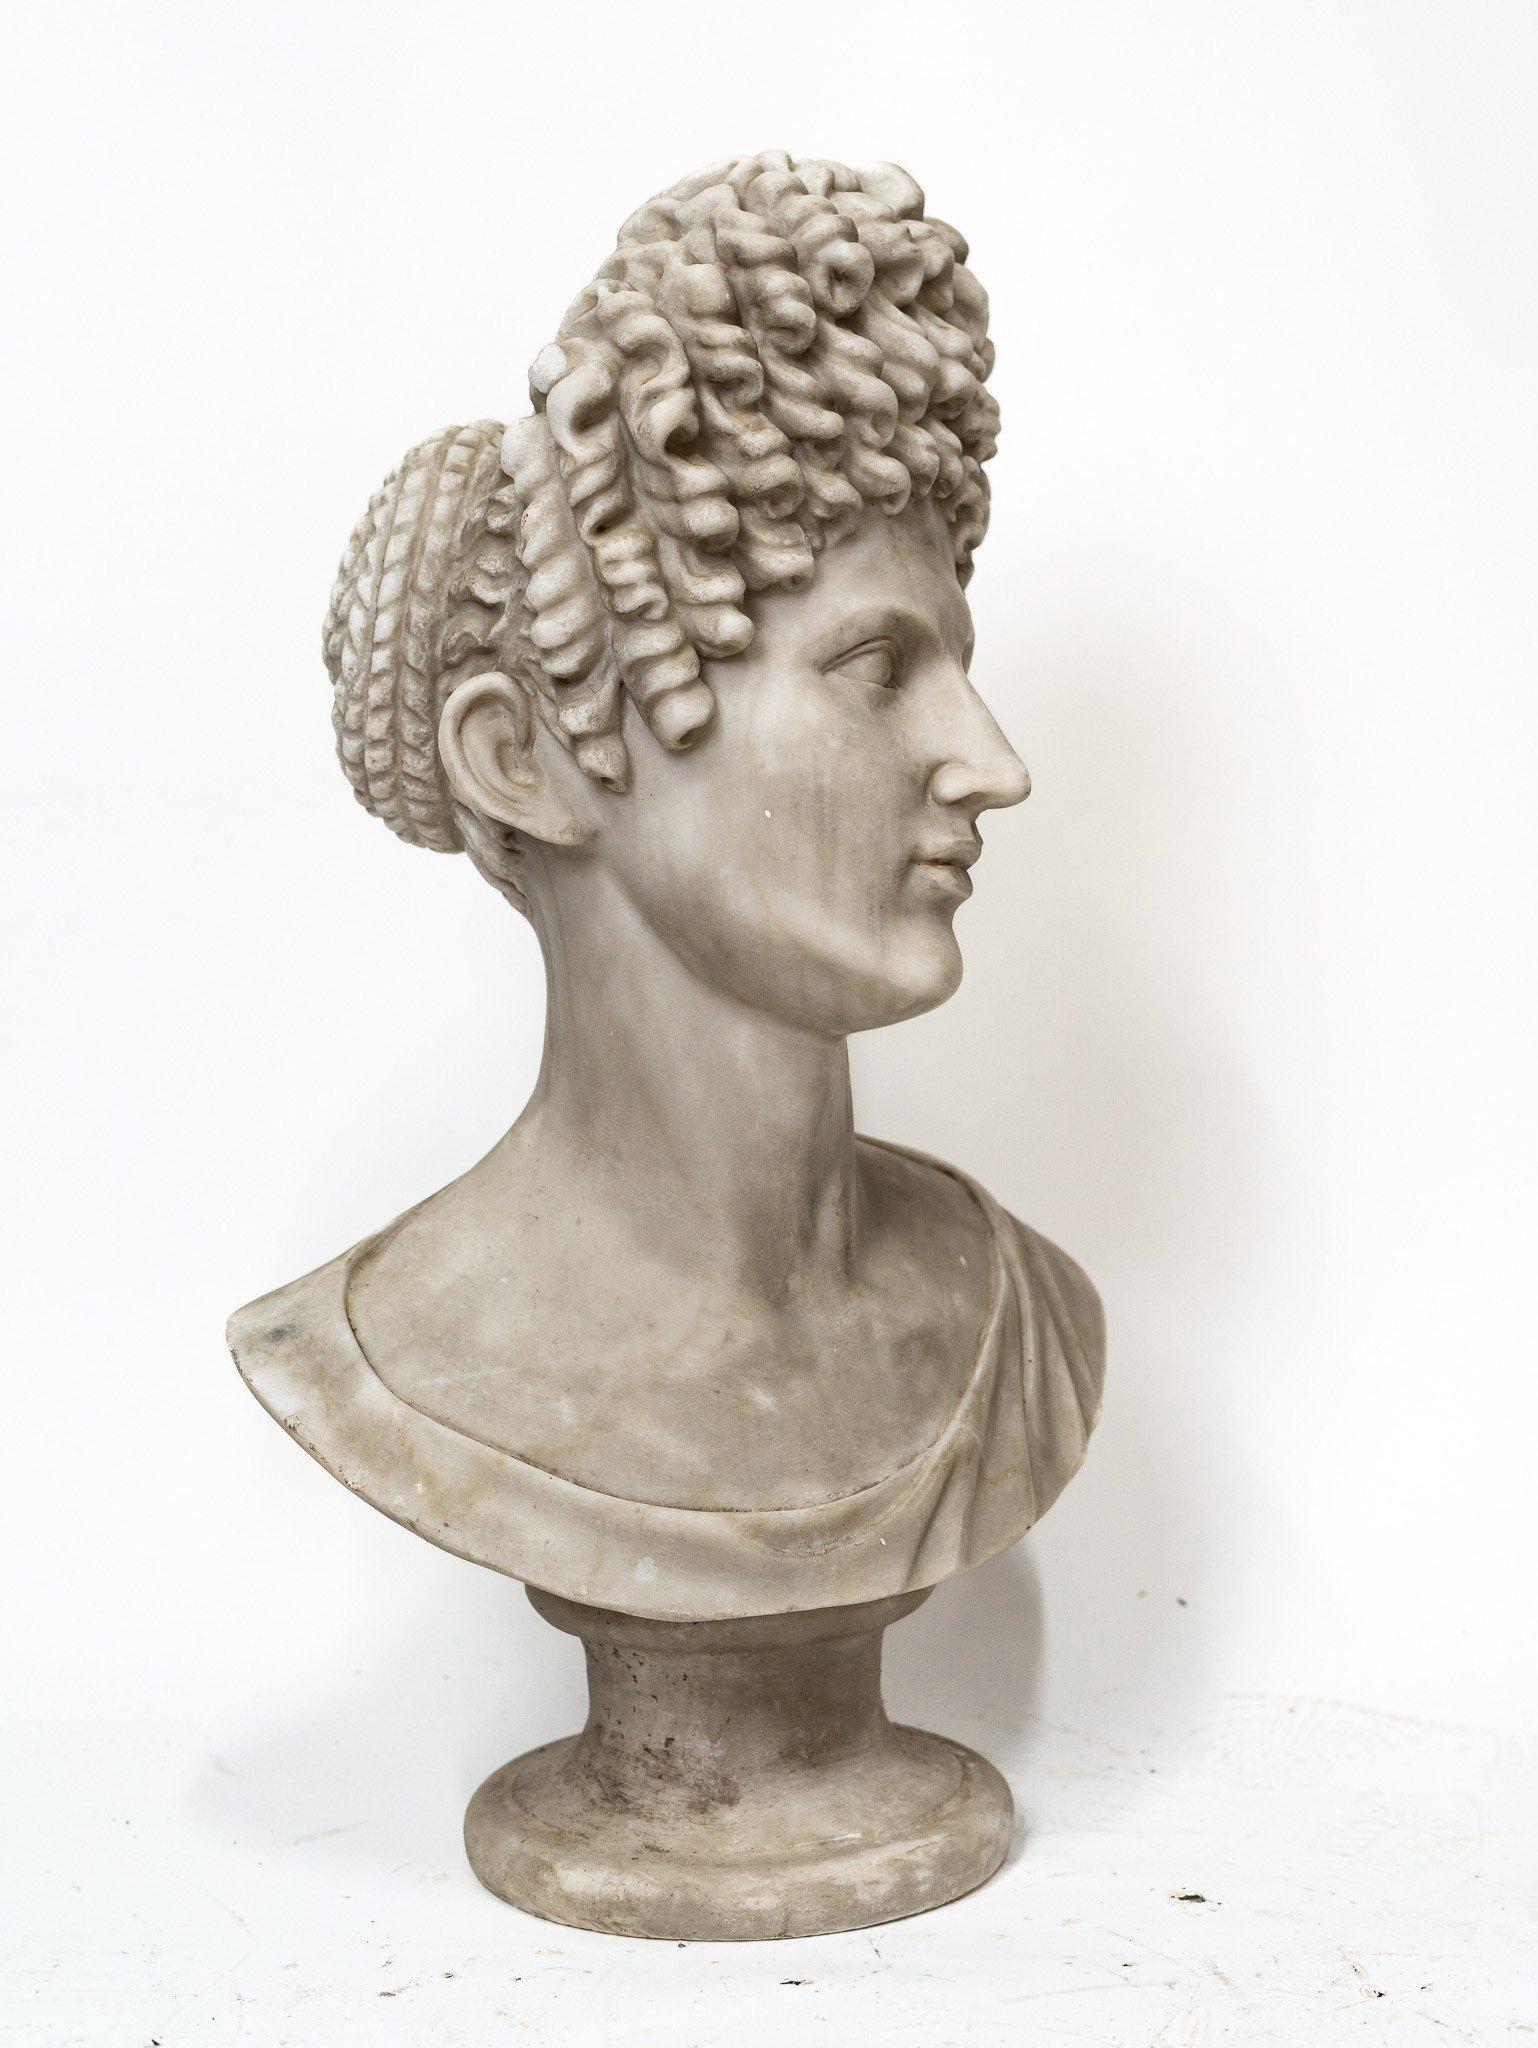 Fonseca head sculpture marble white, xx century.